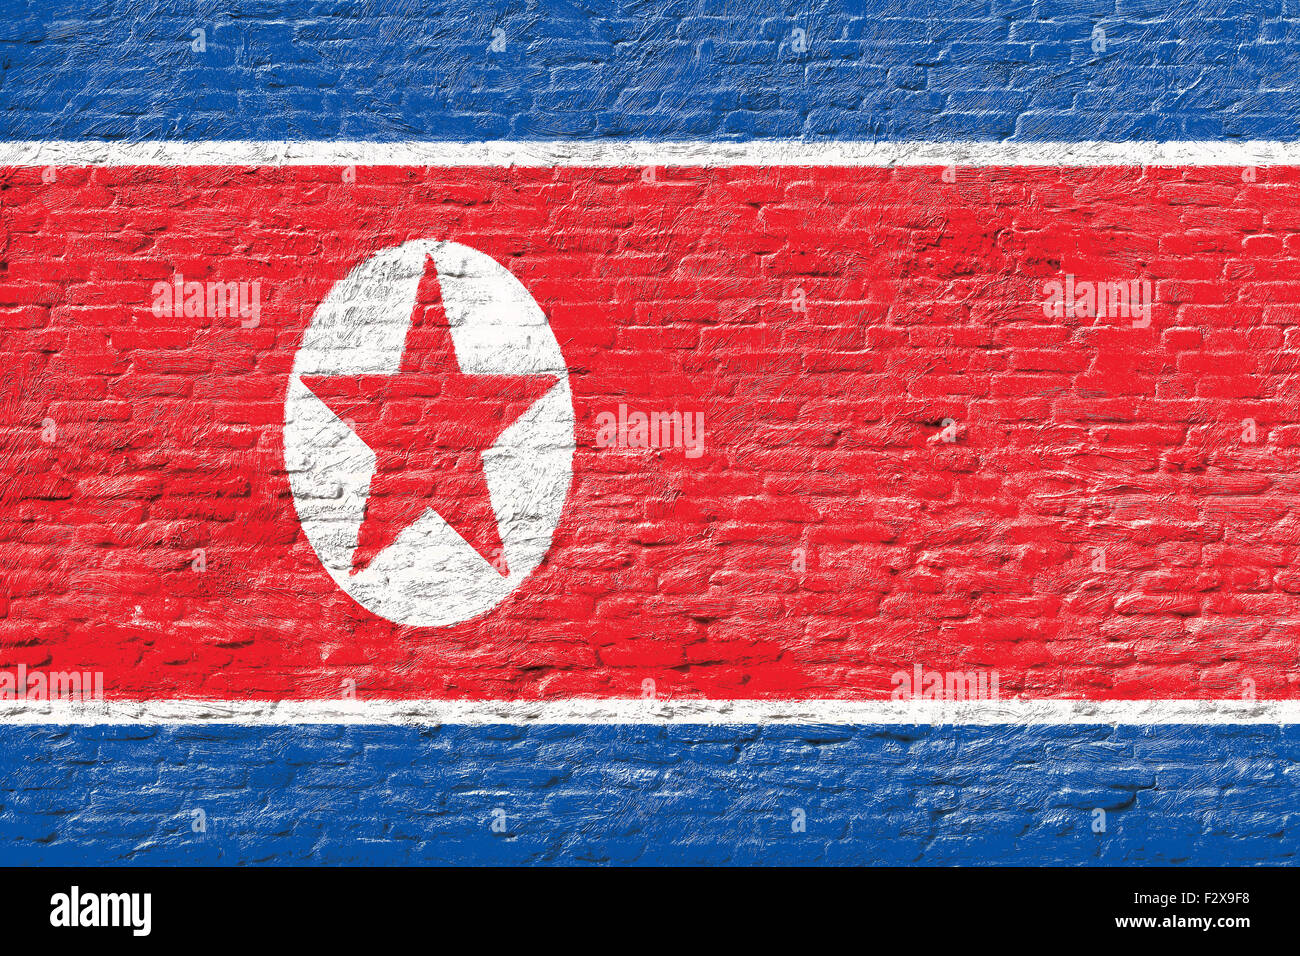 North Korea - National flag on Brick wall Stock Photo